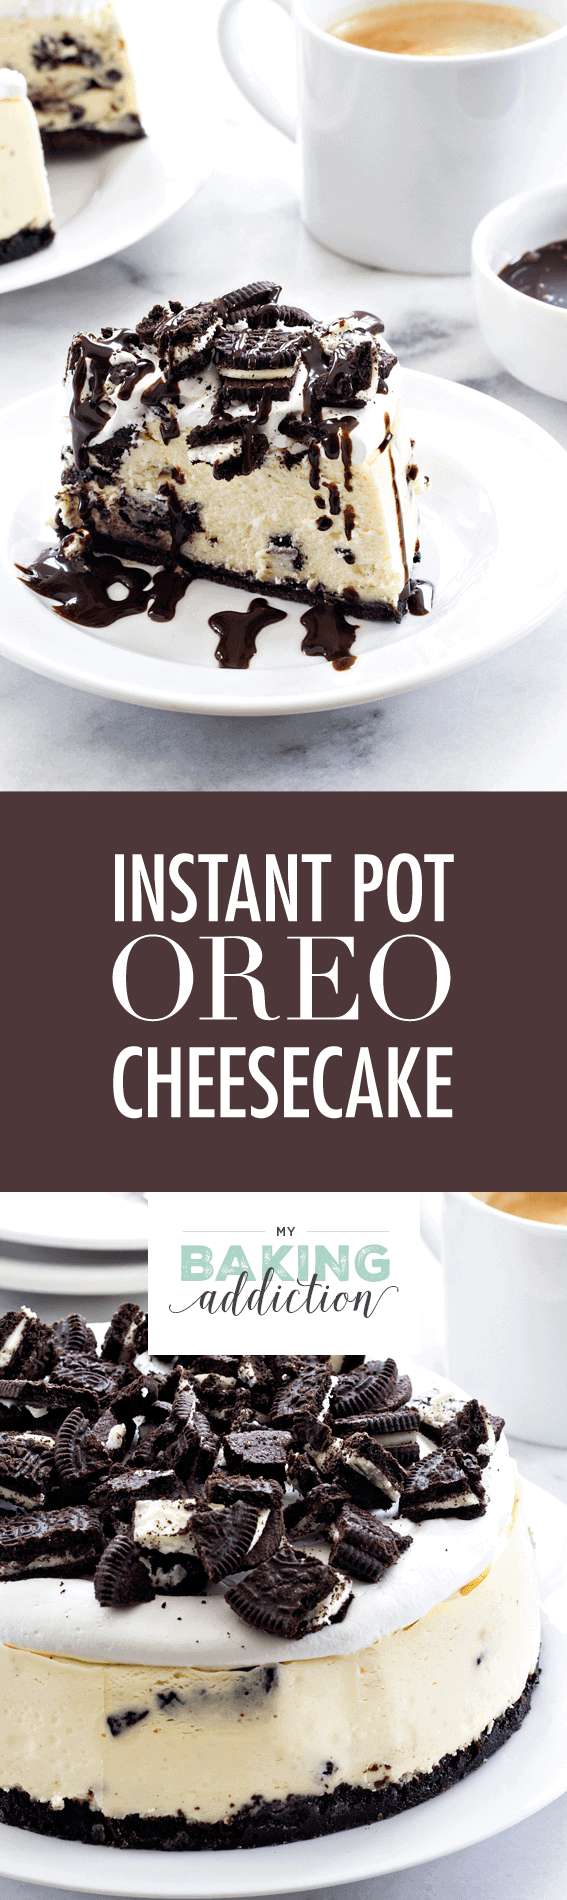 Instant Pot Oreo Cheesecake Recipe